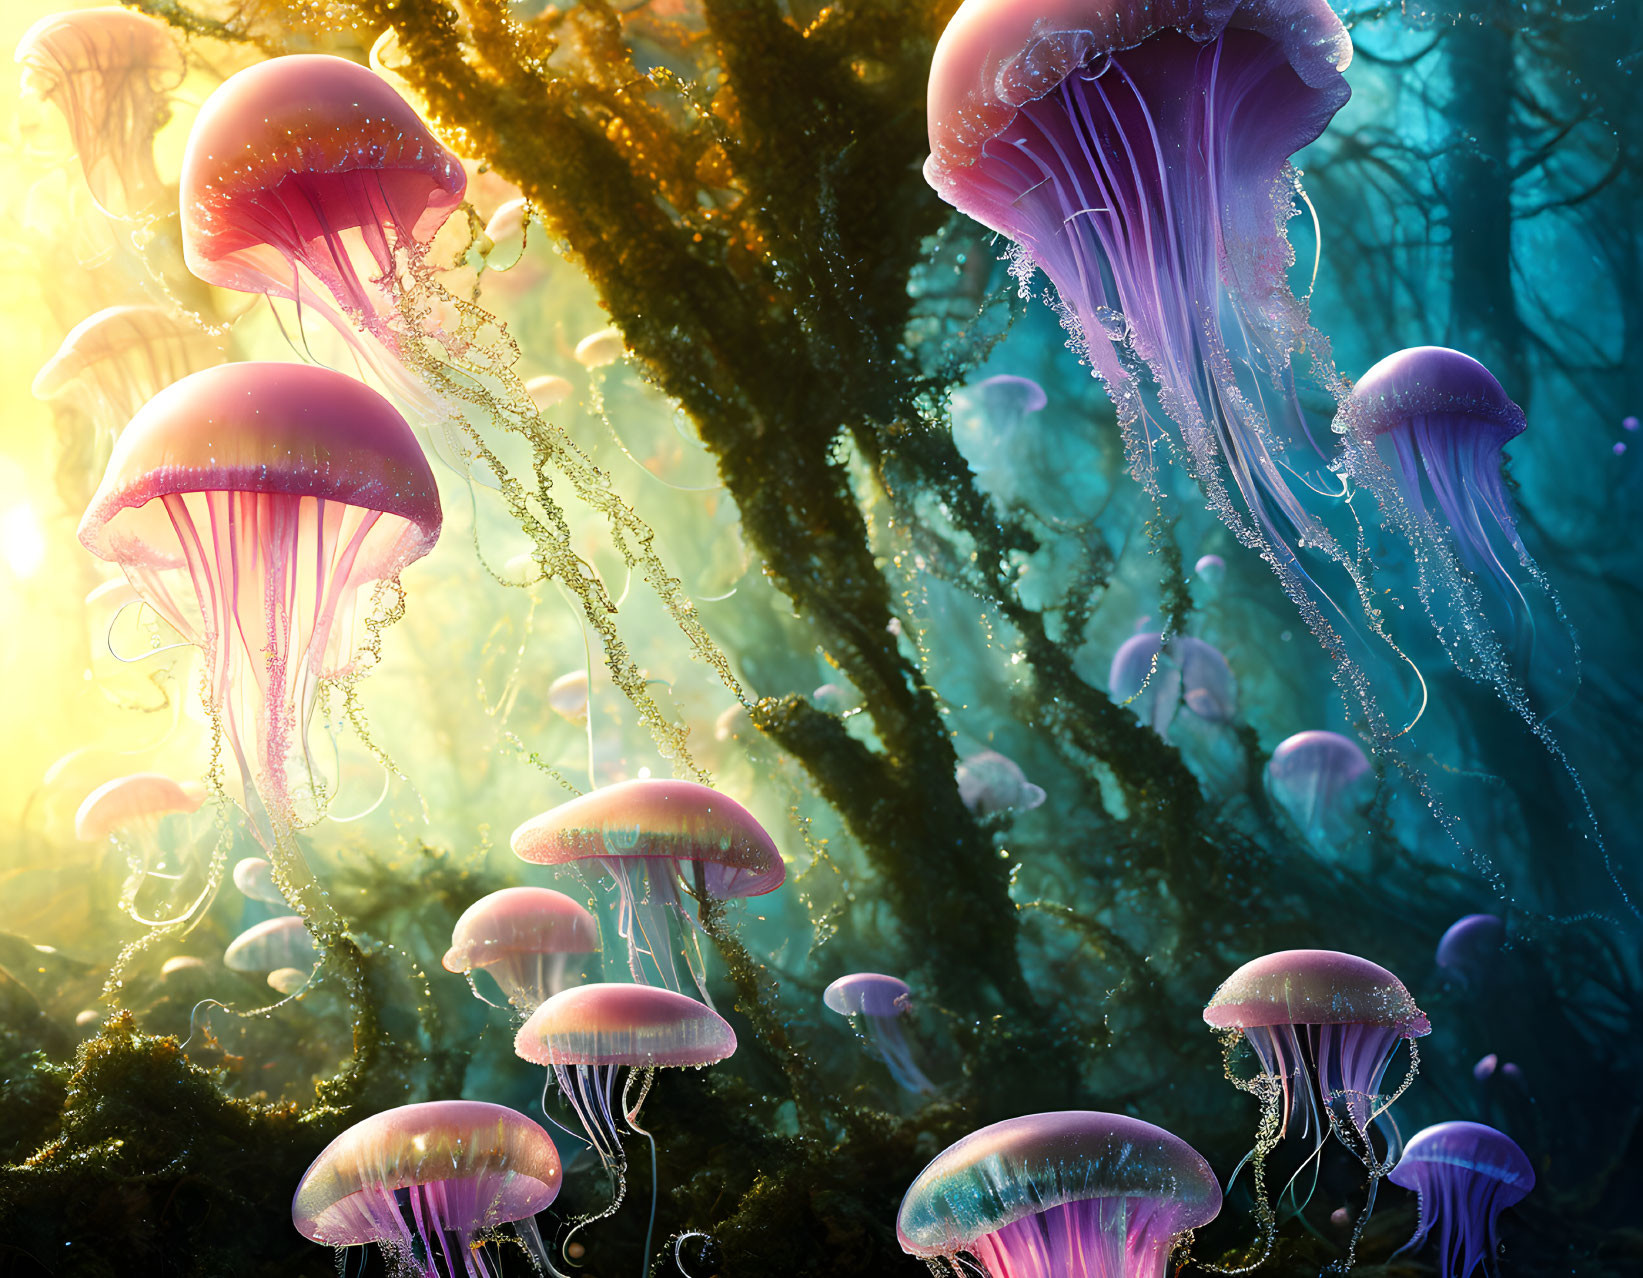 Surreal digital artwork: glowing jellyfish in forest underwater scene